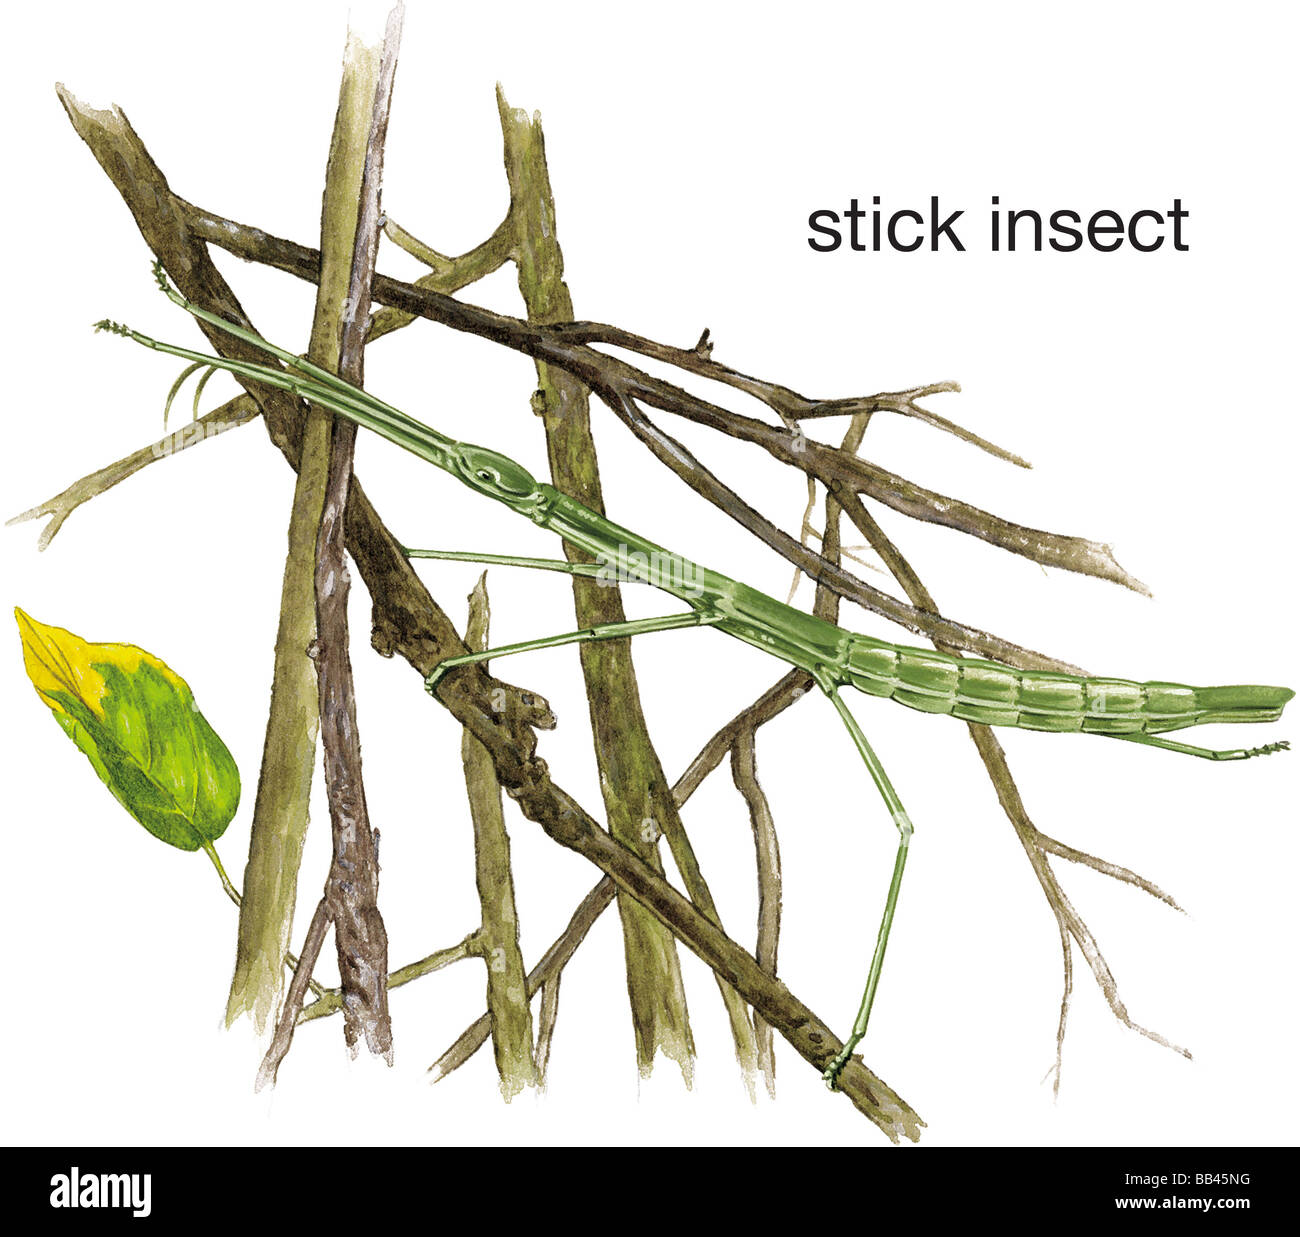 Stick insect (Diapheromera femorata) on twigs Stock Photo